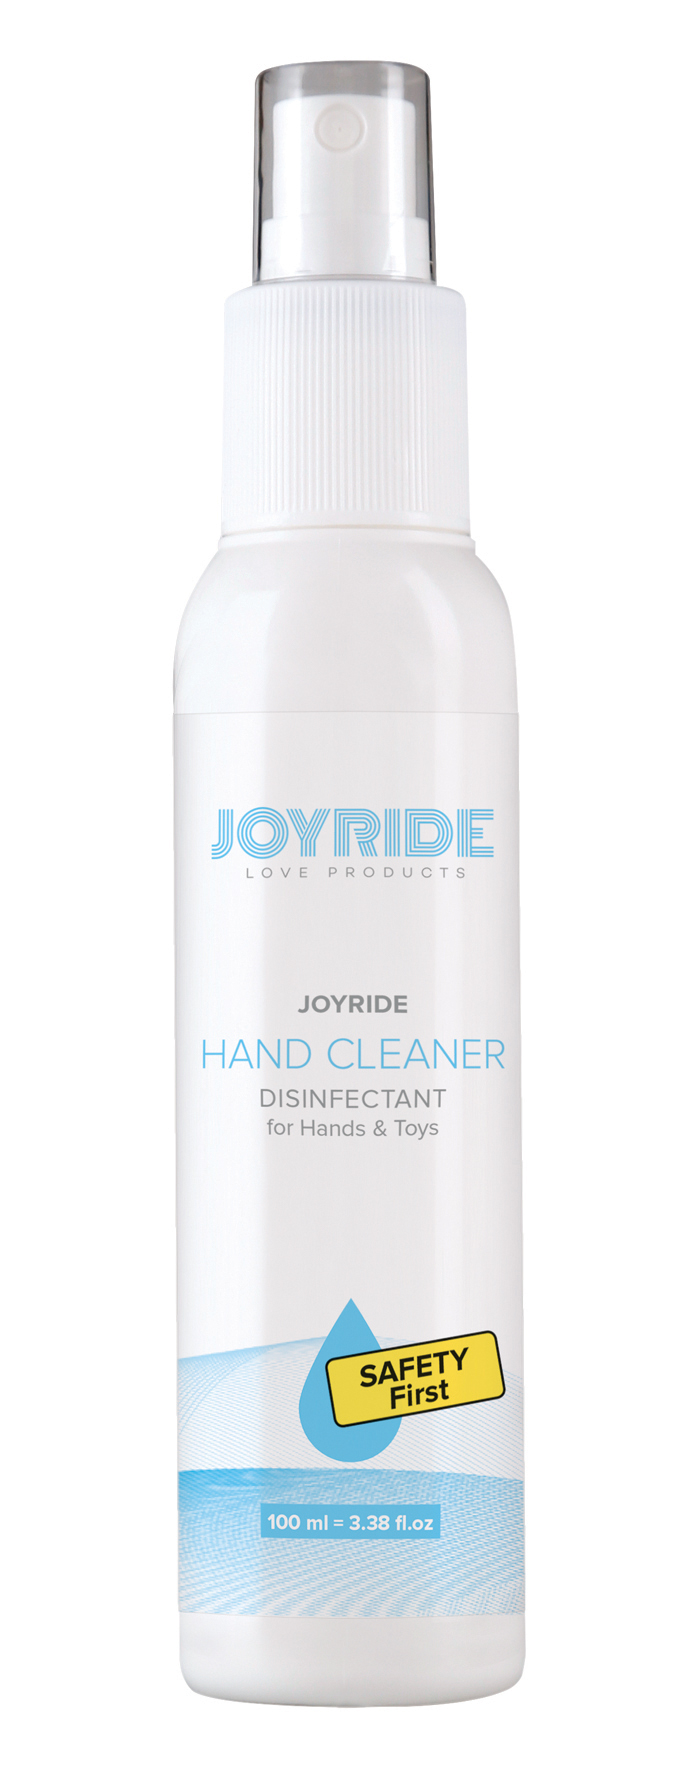 JOYRIDE Hand Cleaner for Hands & Toys 100ml